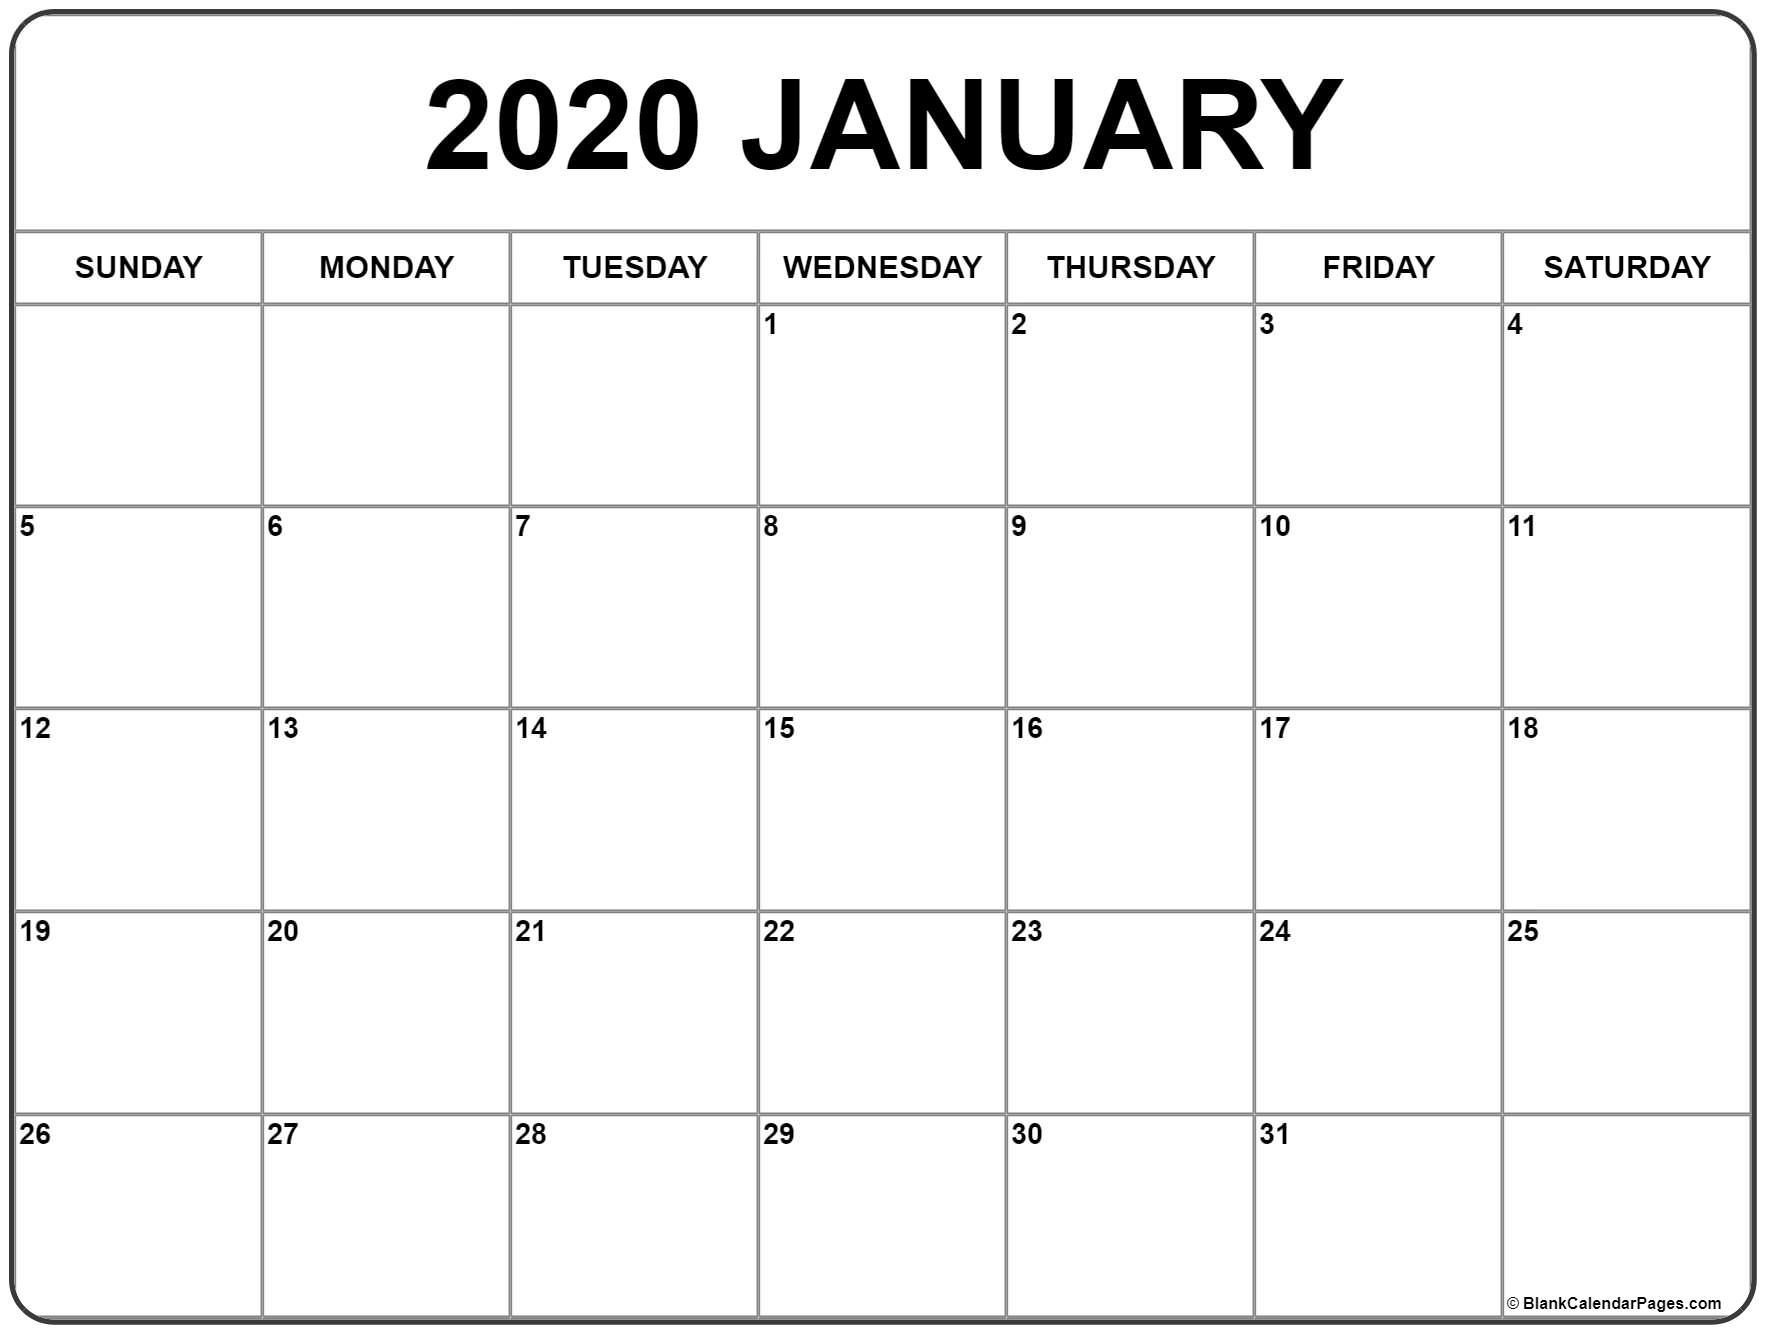 January 2020 Calendar | Free Printable Monthly Calendars Free Printable 2020 Monthly Calendar